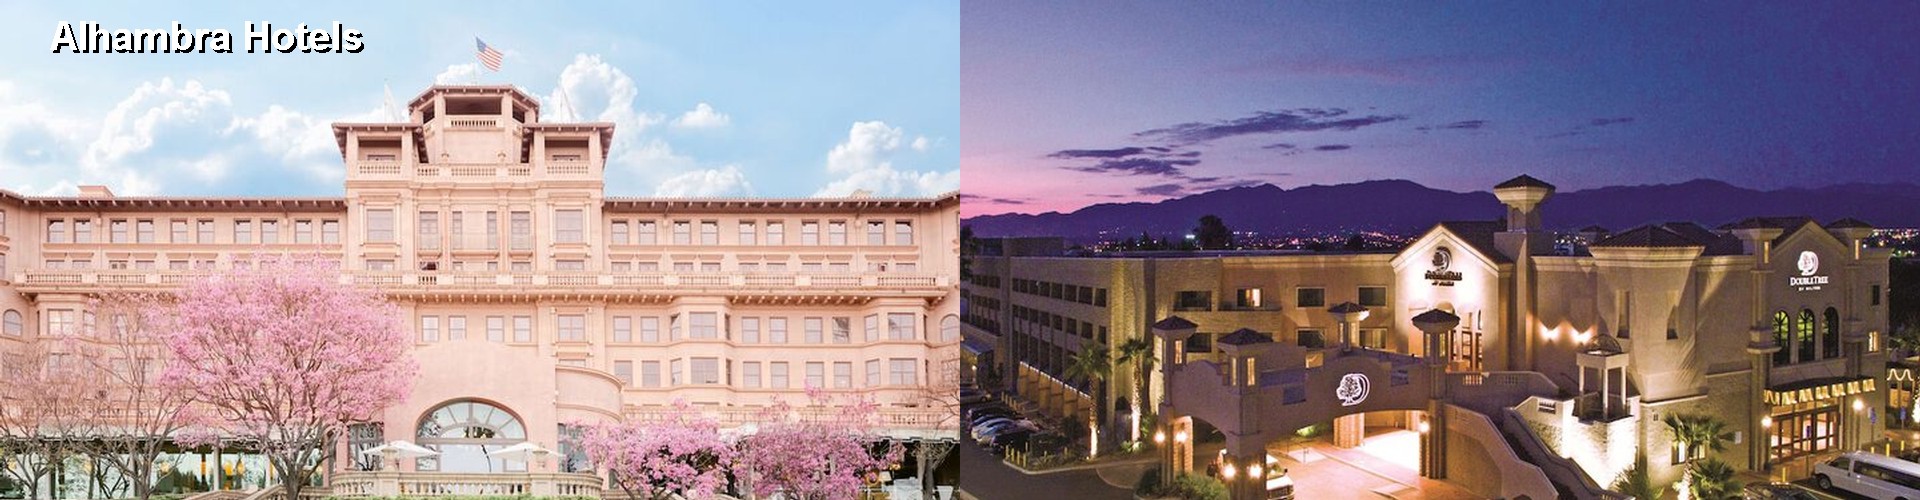 4 Best Hotels near Alhambra